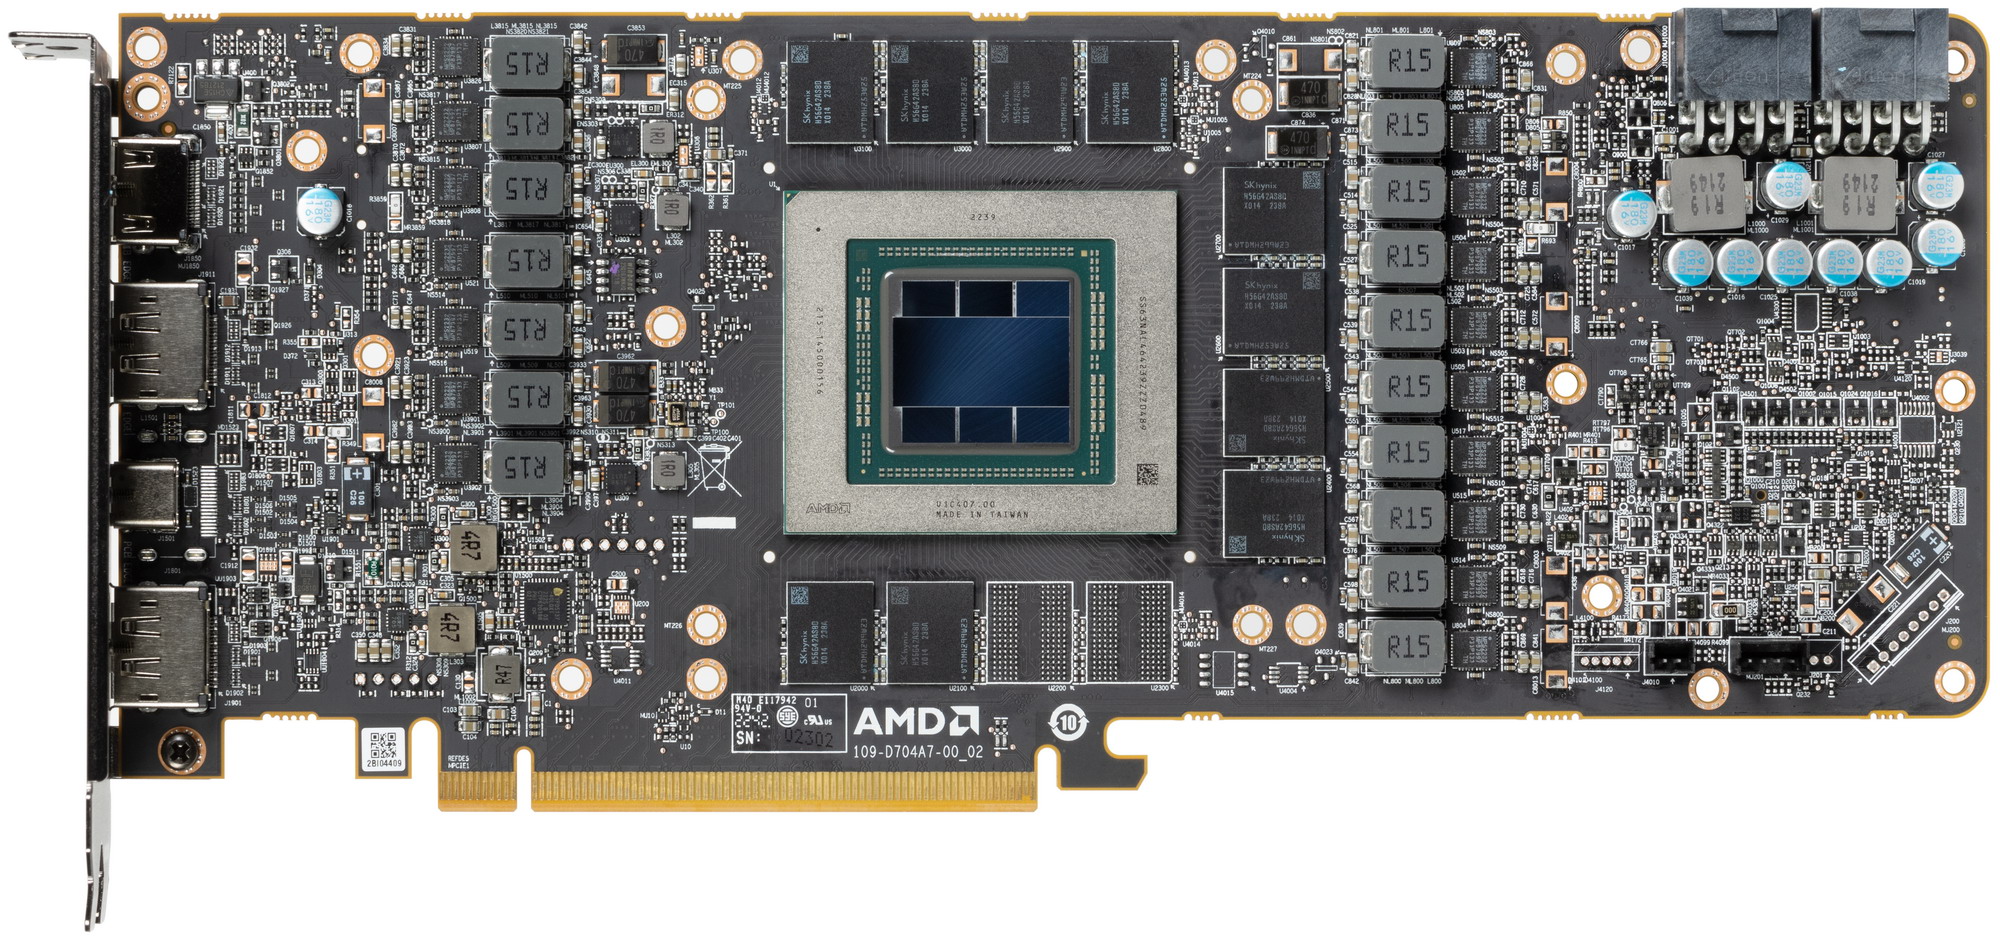 Radeon rx 7900 gre gaming oc. AMD Radeon RX 7900 XTX reference. Gigabyte AMD Radeon RX 7900 XTX. Sapphire Nitro+ Radeon RX 7900 XTX Vapor. XFX AMD Radeon RX 6900 XT 16gb 256bit на водяном охлаждении.